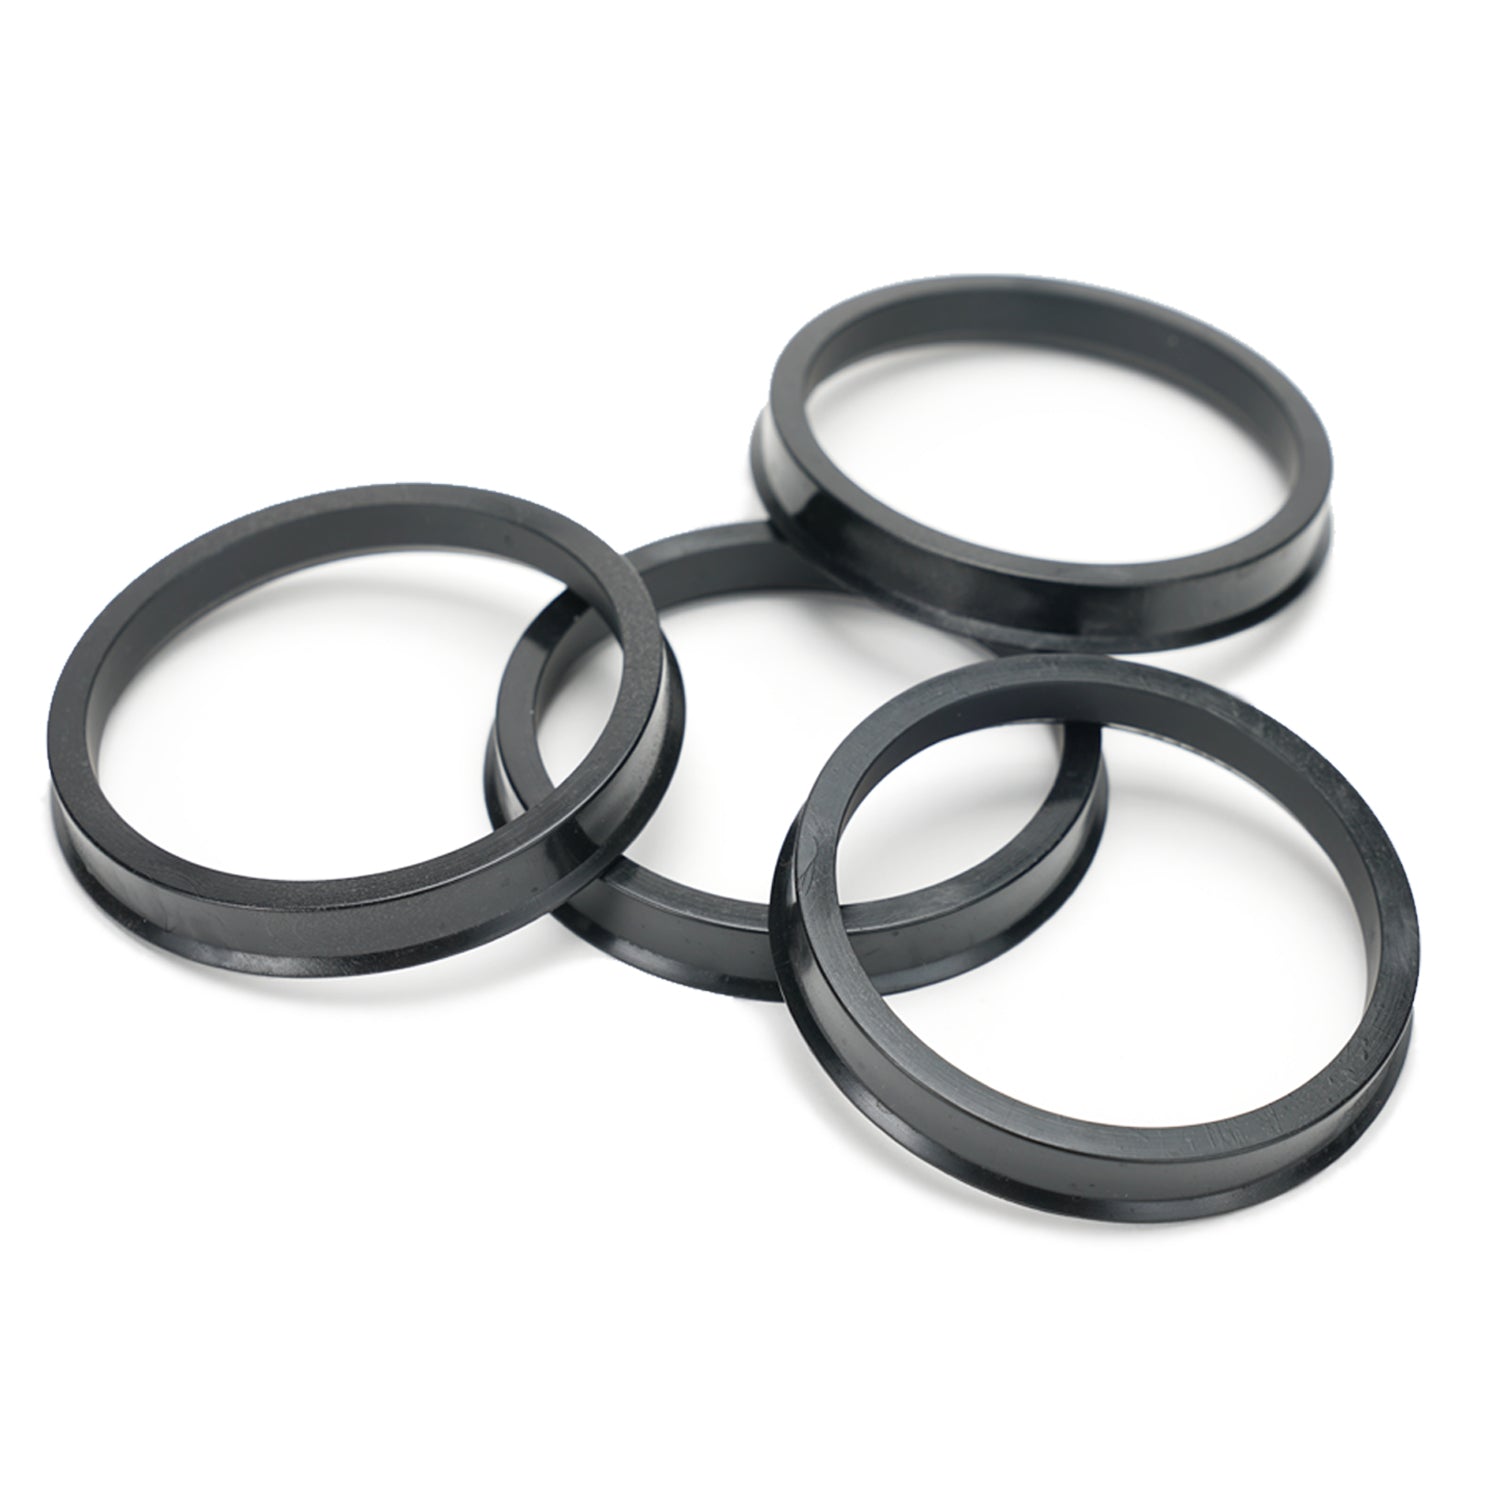 Hub-Centric Rings - Polycarbonate | Subaru (73.1mm-56.1mm) - Relations Race Wheels